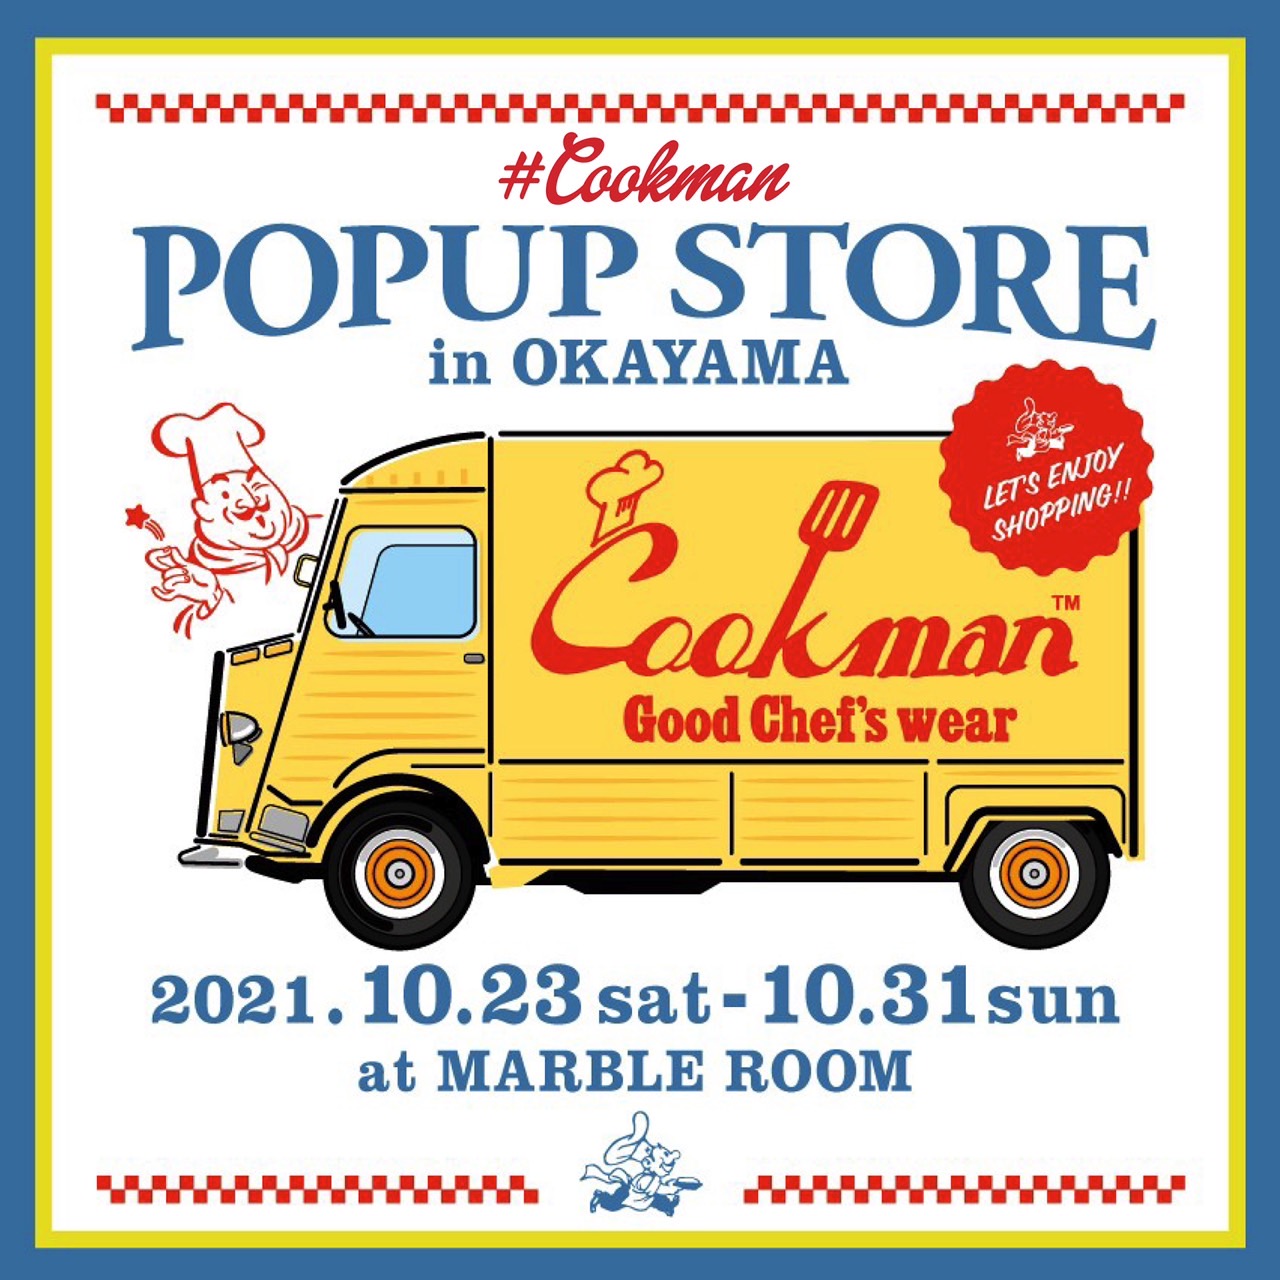 Cookman POP UP STORE in OKAYAMA